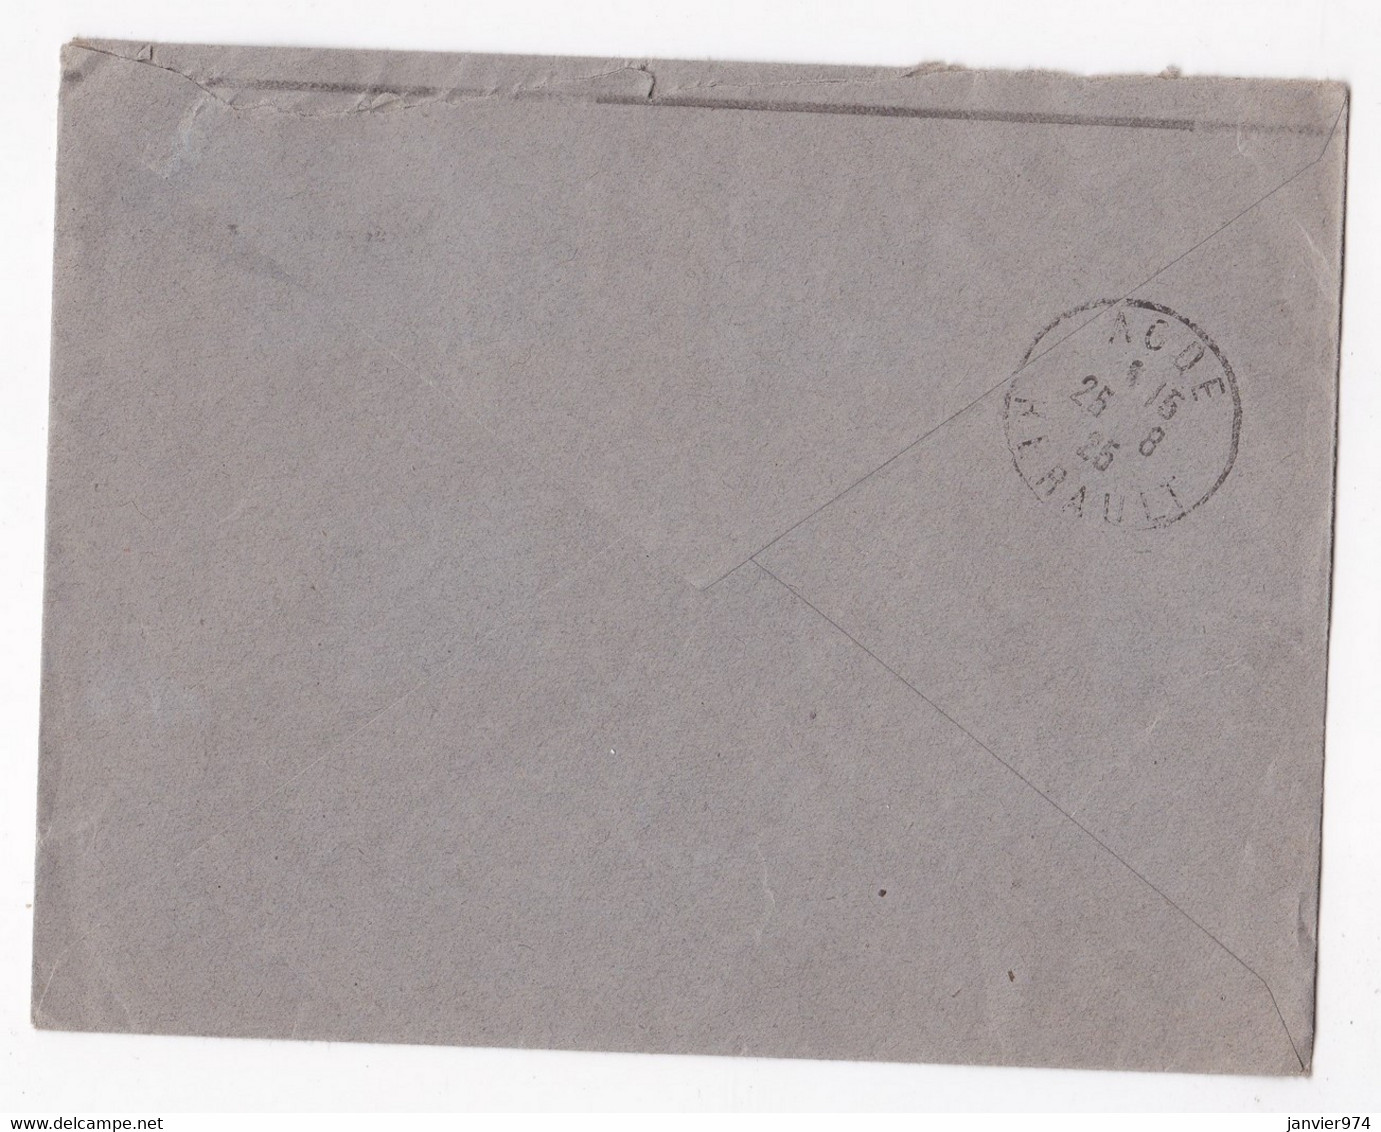 Enveloppe 1925, G. Schloesser, Bijoutier Fabriquant à Perpignan - Briefe U. Dokumente